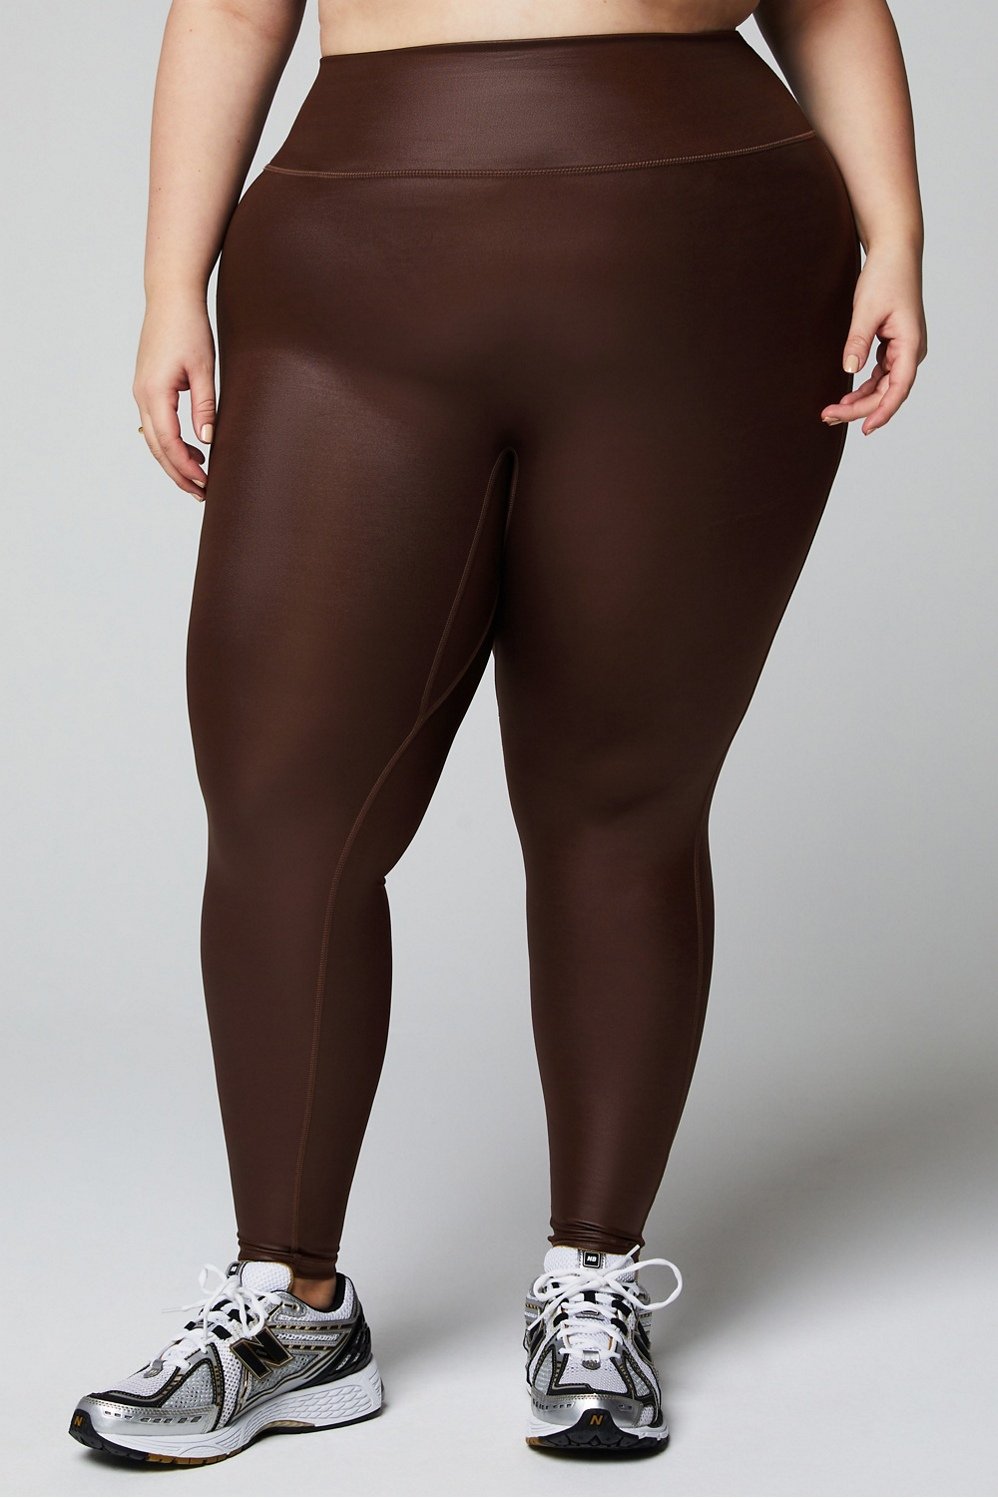 Chocolate Brown Camo Capris  Leggings kids, Browning camo, Plus size  leggings